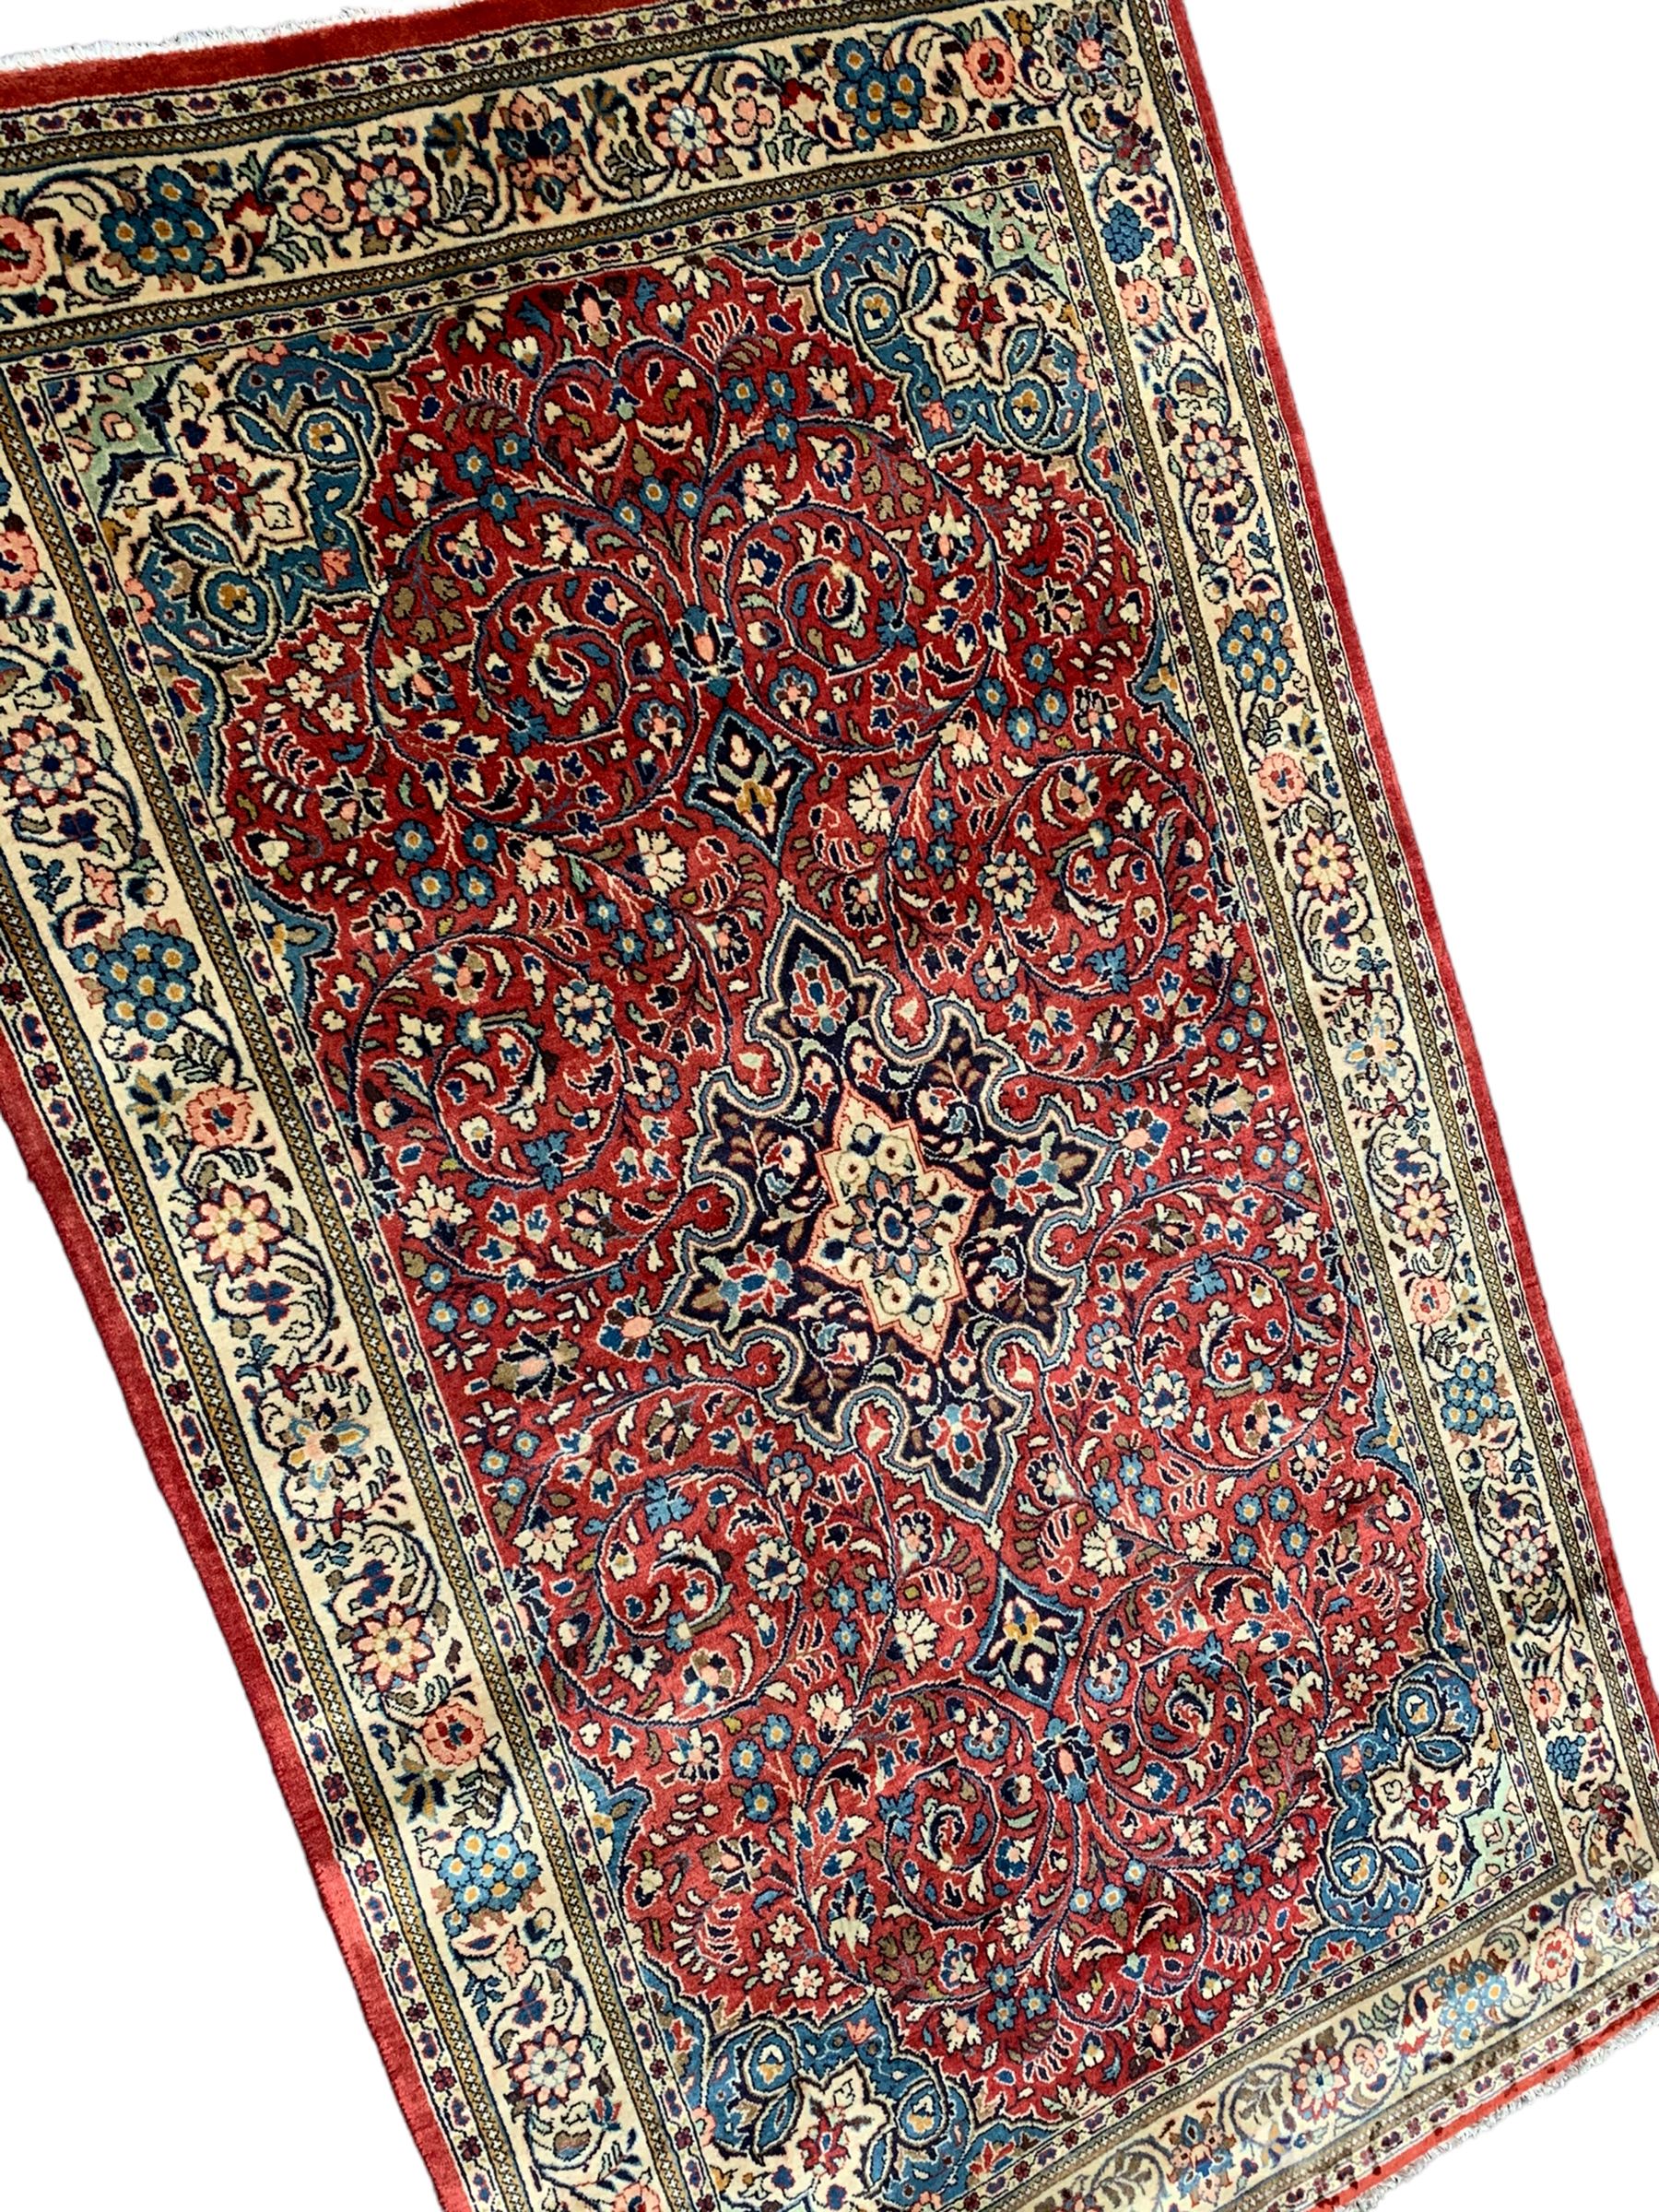 Persian Mahallat crimson ground rug - Image 2 of 7